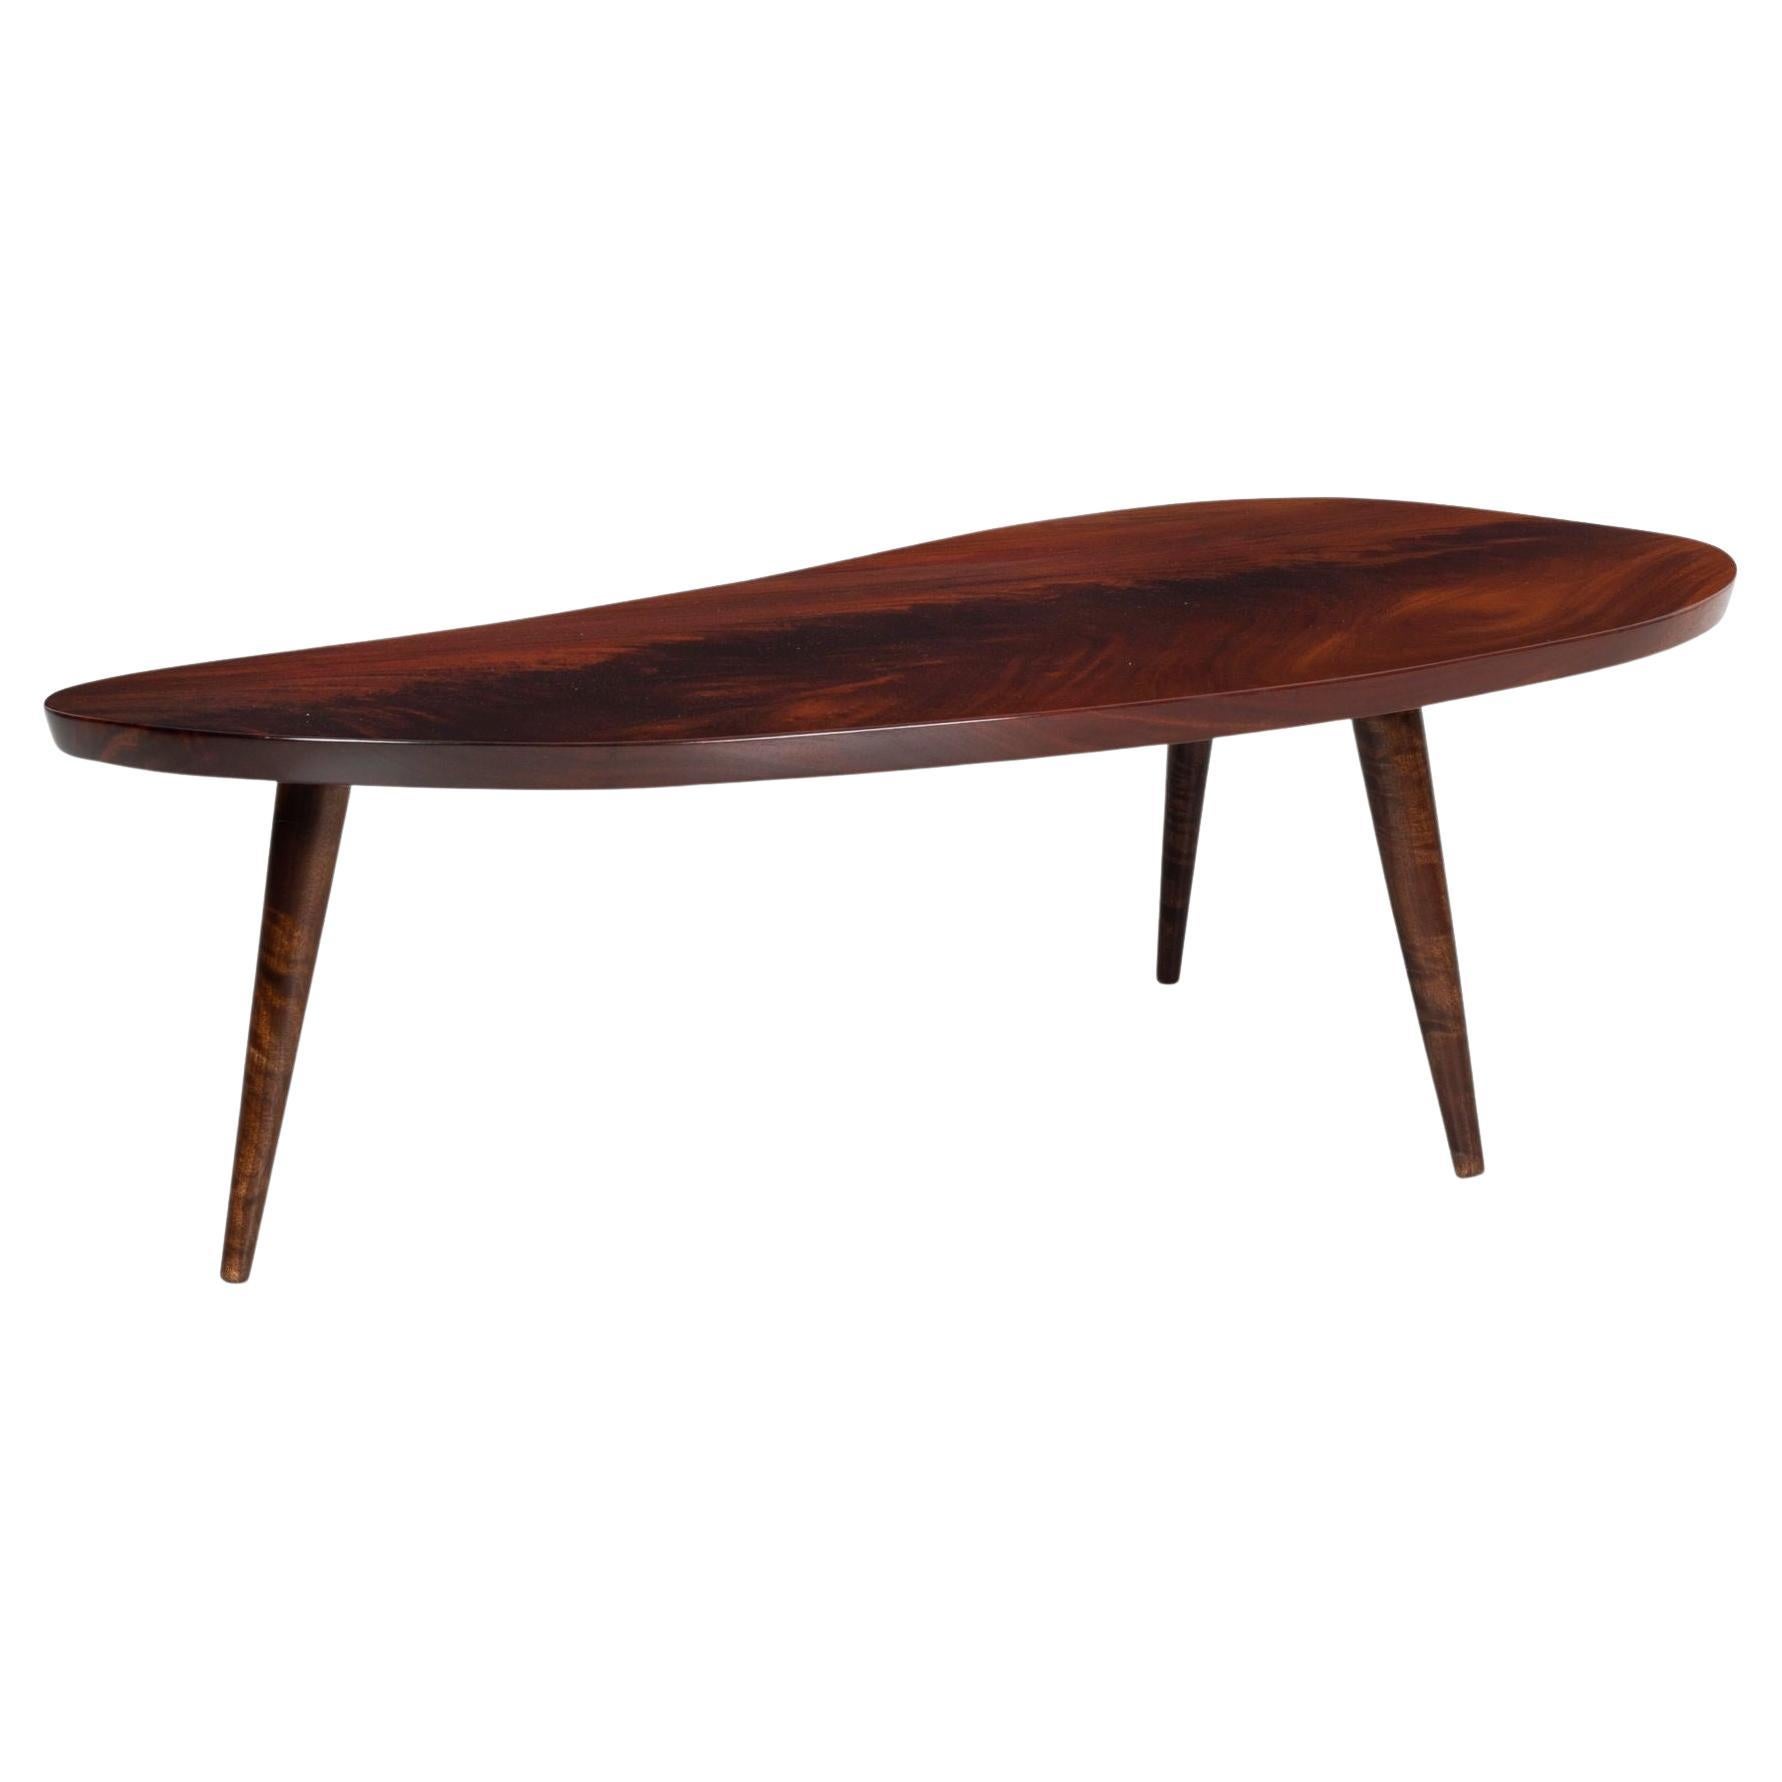 Arthur Espenet Carpenter Teardrop Table in Solid Walnut